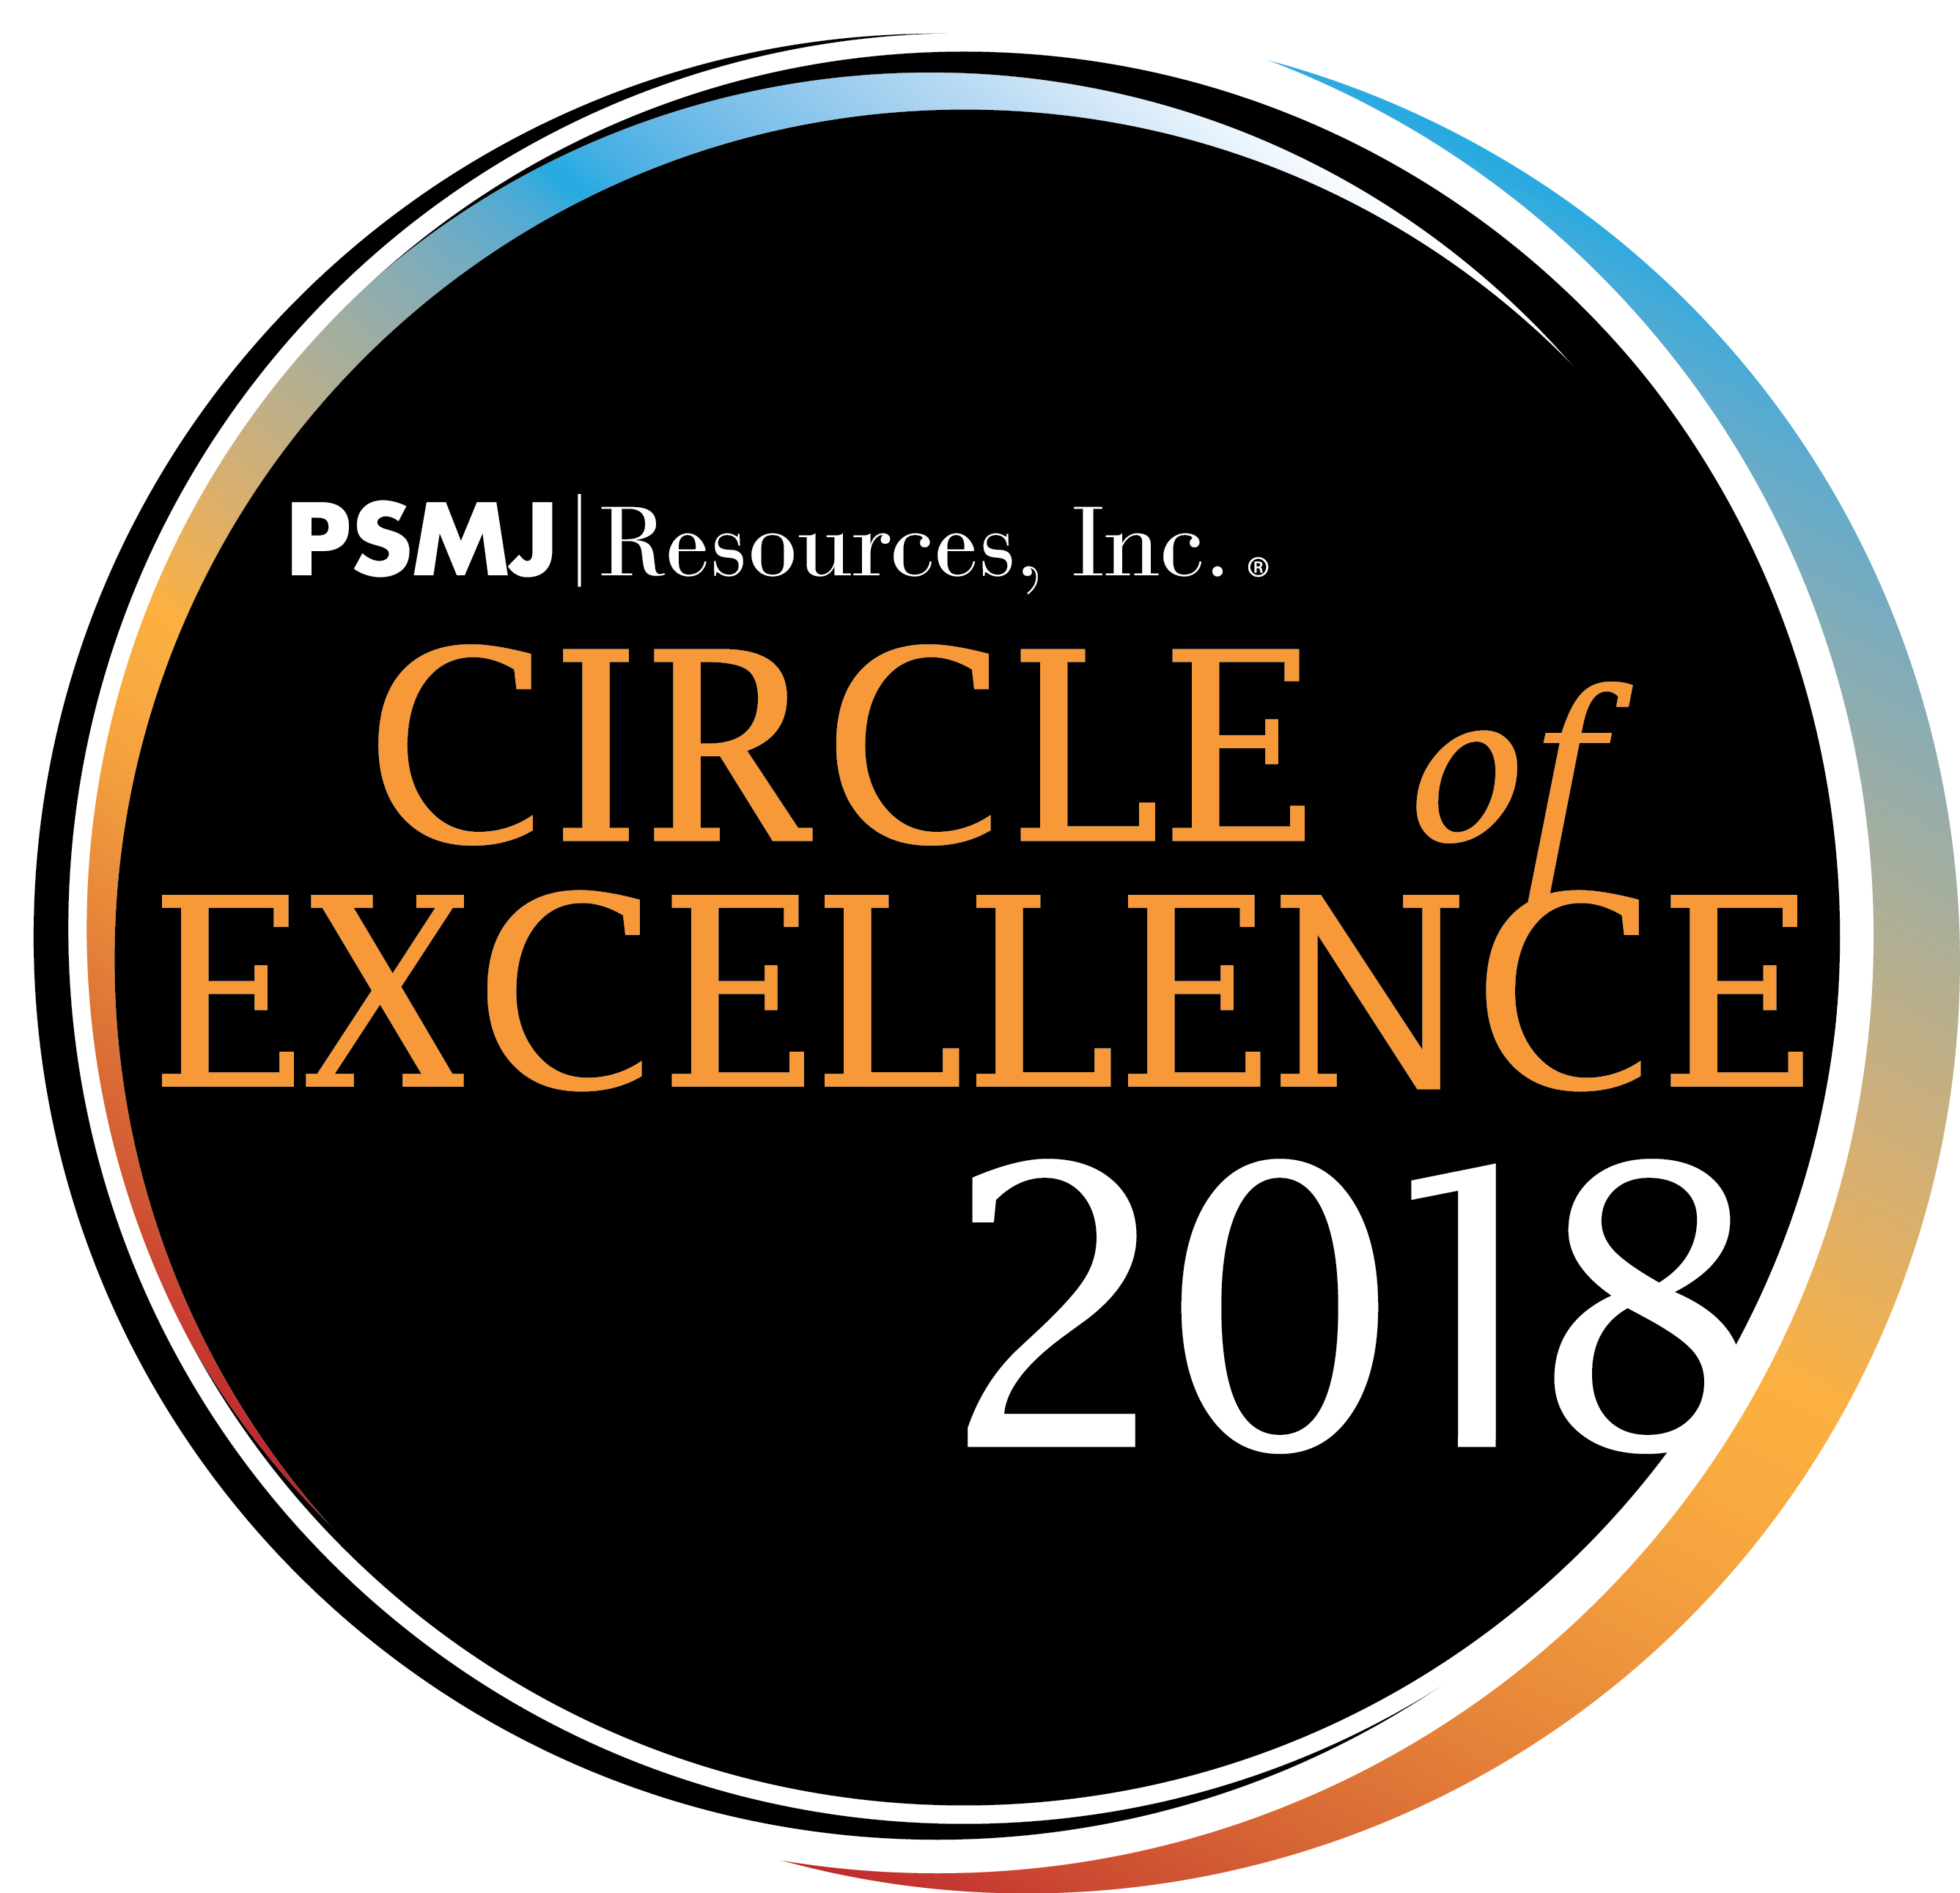 PSMJ Circle of Excellence Award 2018